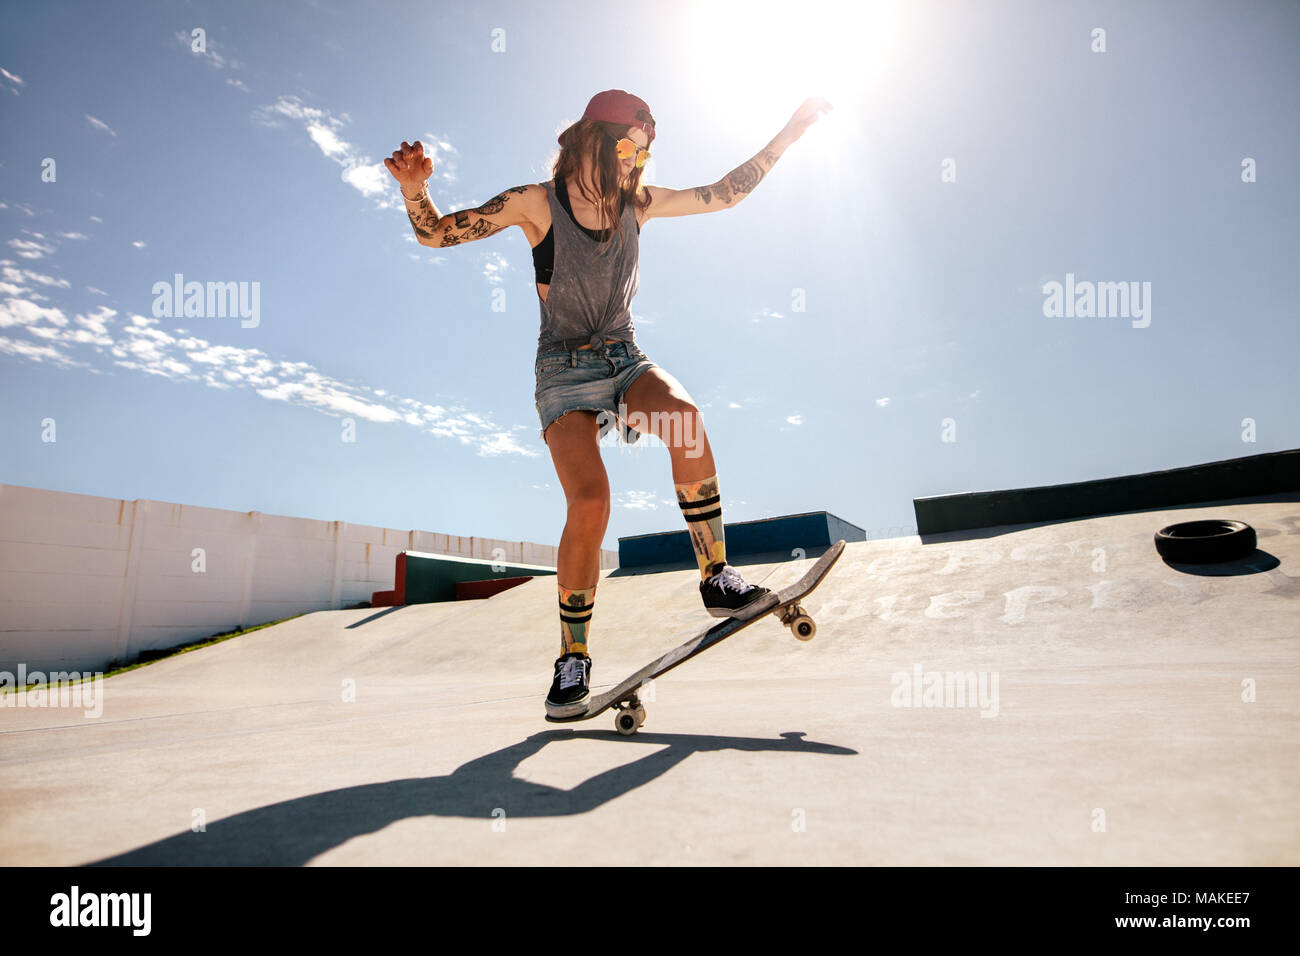 Skater femmina lo skateboard a skate park. Le donne di fare trucchi su skateboard. Foto Stock